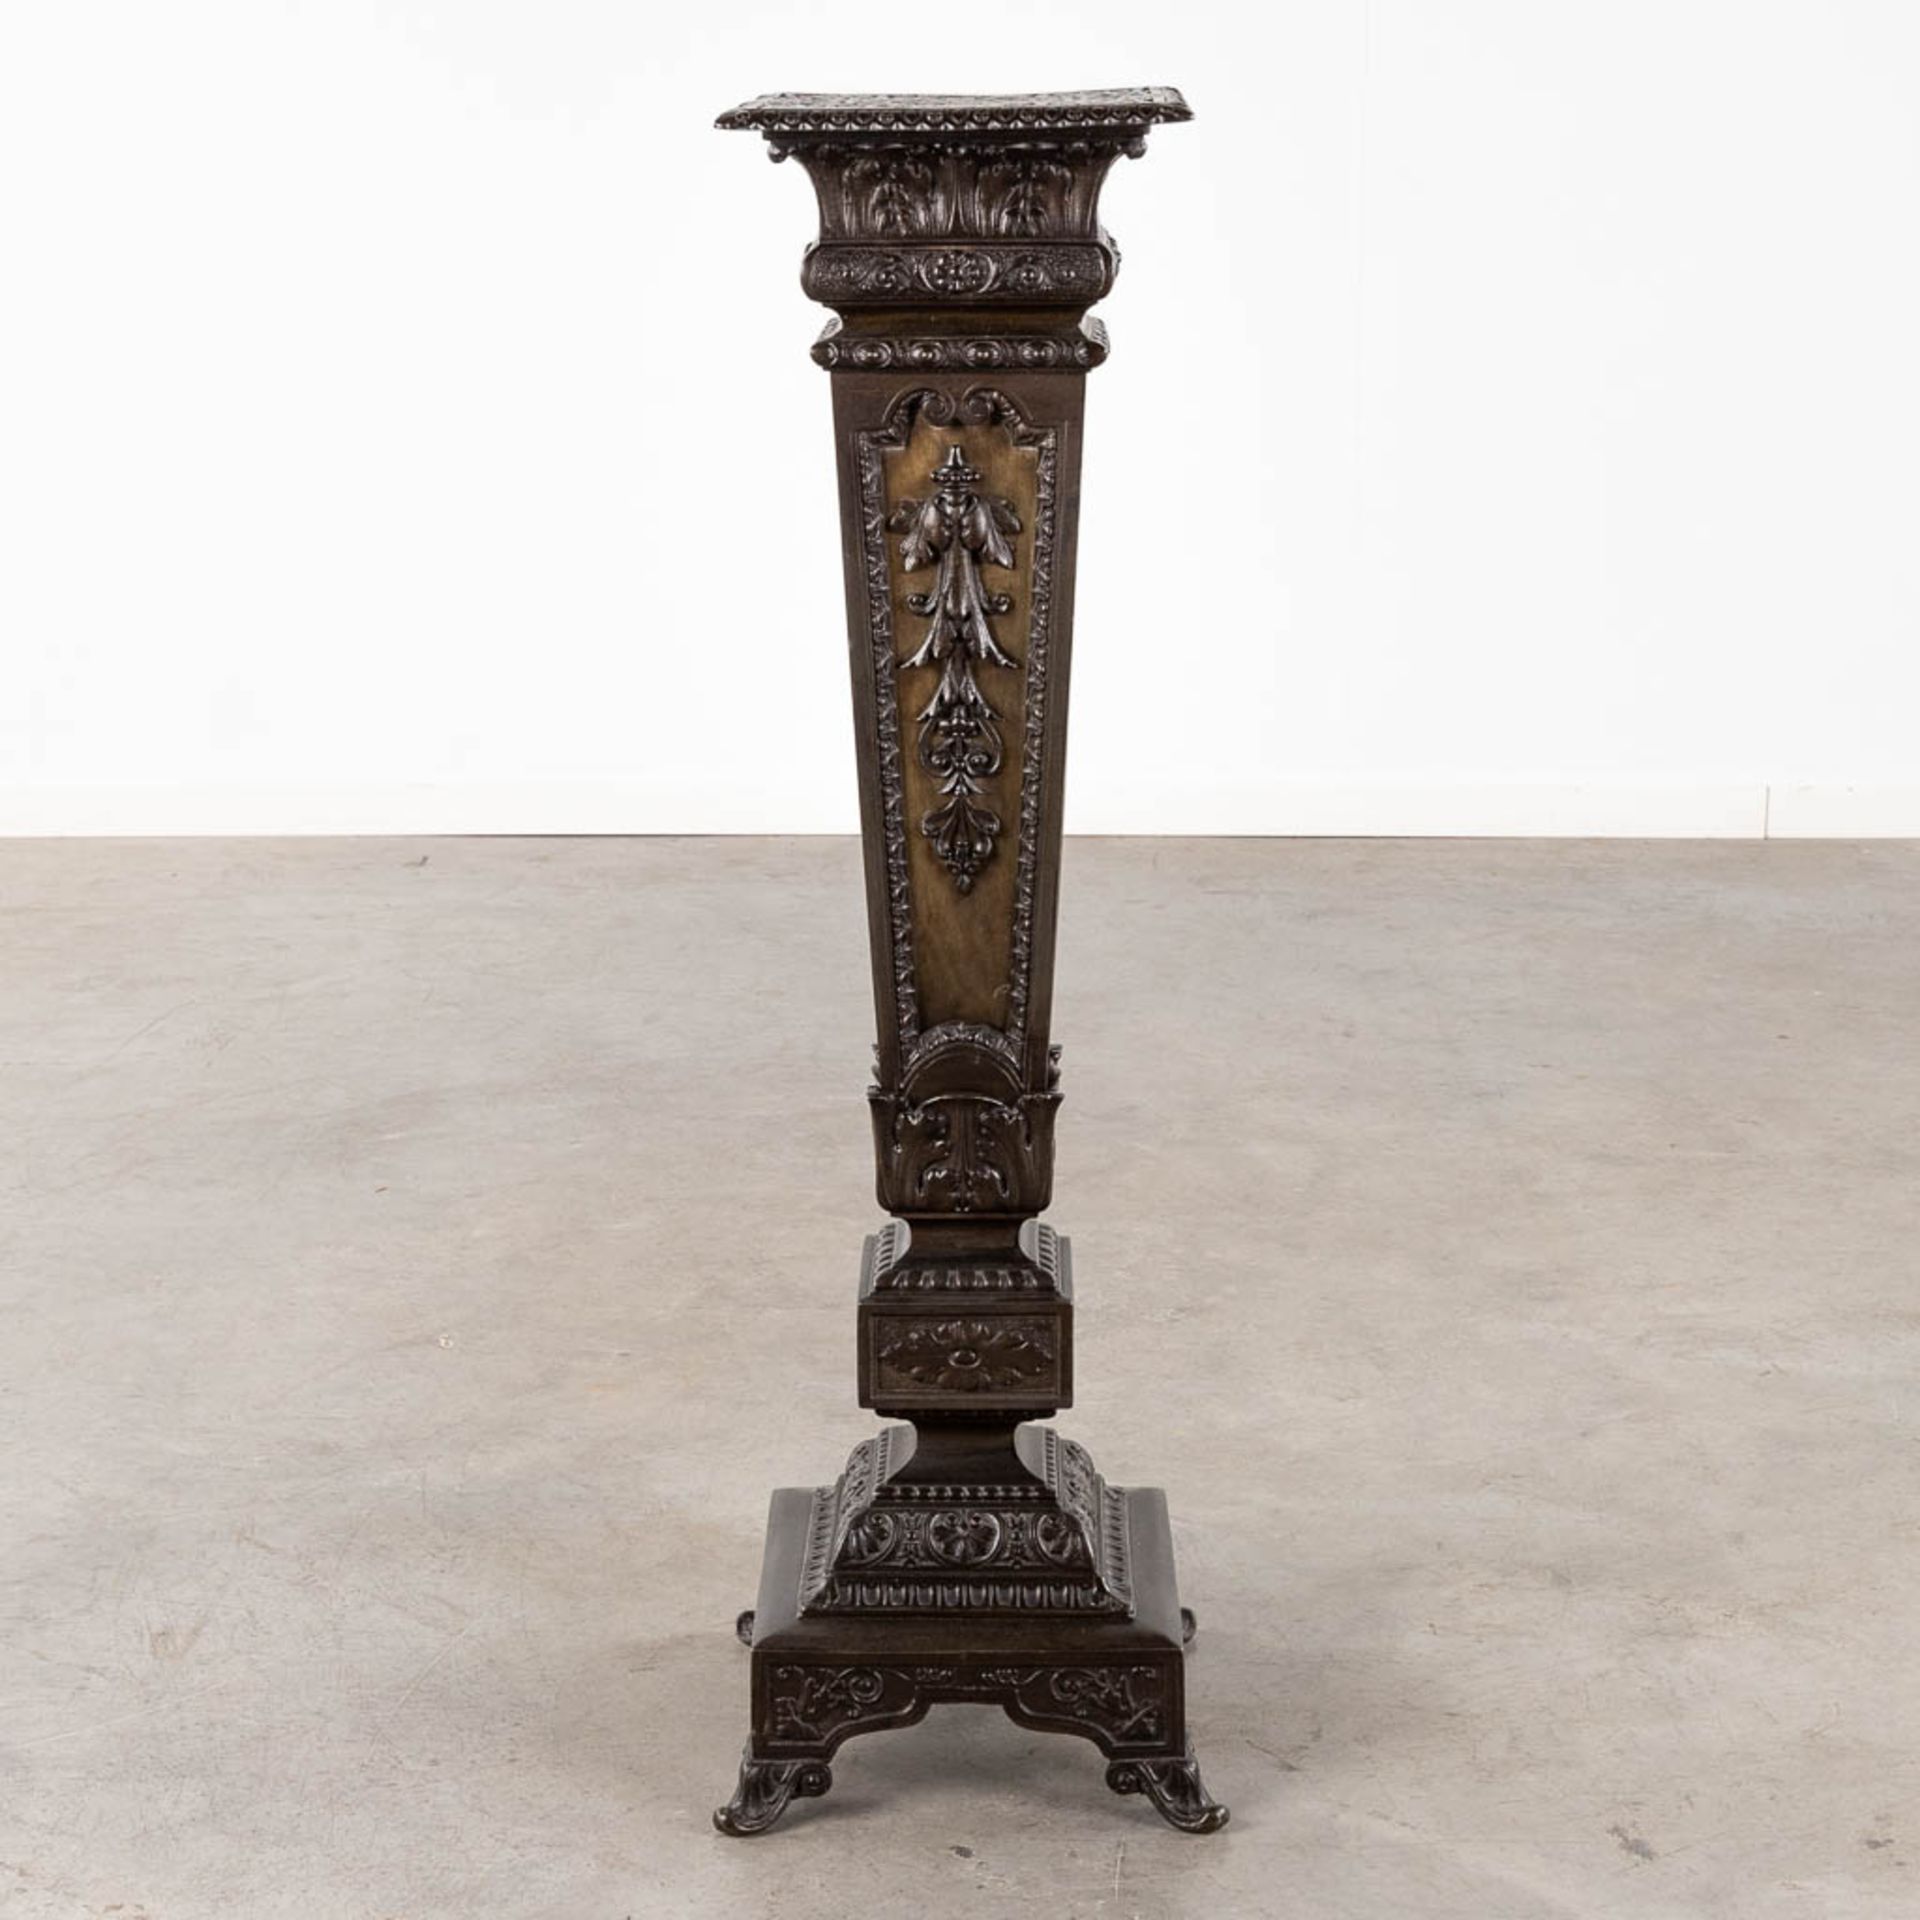 An antique pedestal, spelter in Louis XVI style. (D:31 x W:31 x H:102 cm) - Image 4 of 11